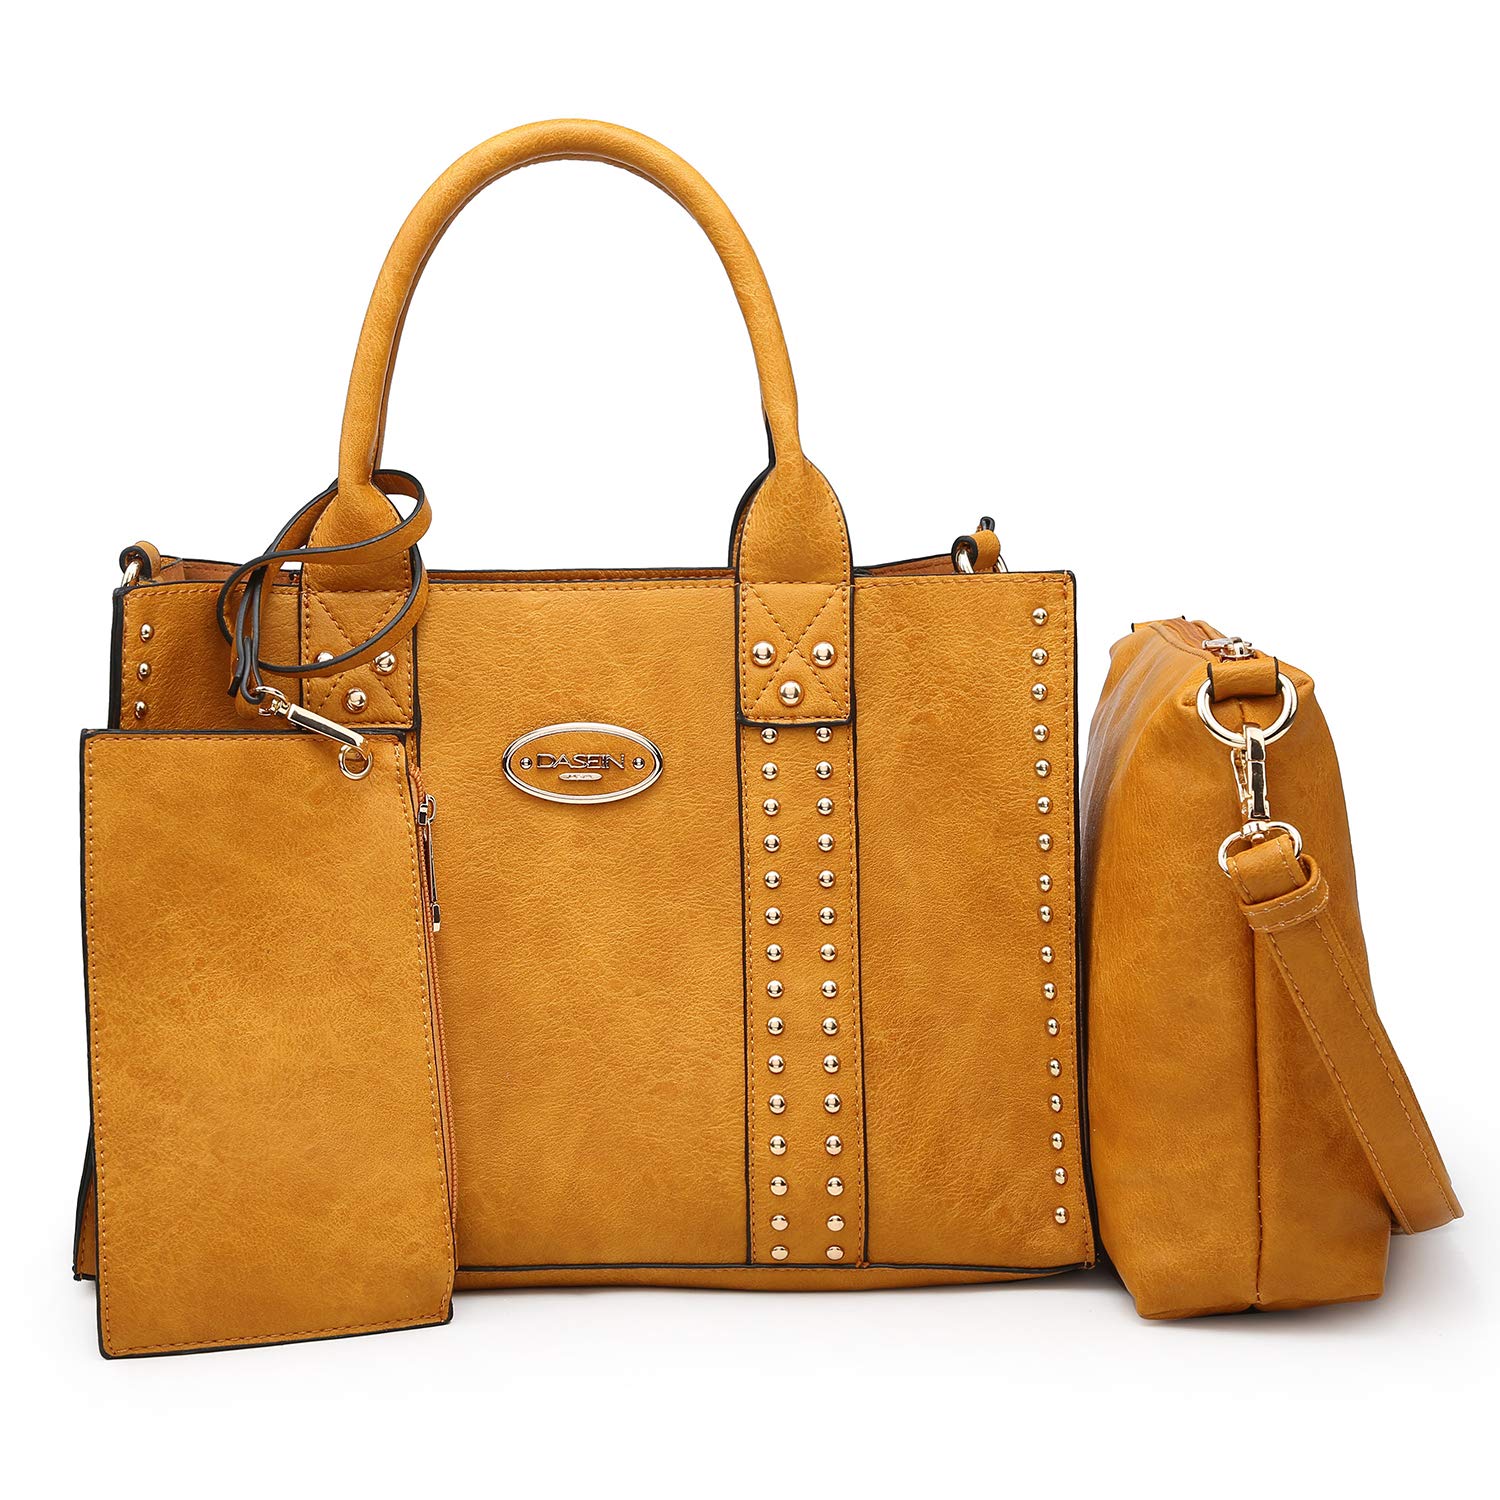 Dasein 3pcs Women Handbag Wallet Top Handle Satchel Purse Hobo Crossbody Shoulder Bag Tote Bag with Studs